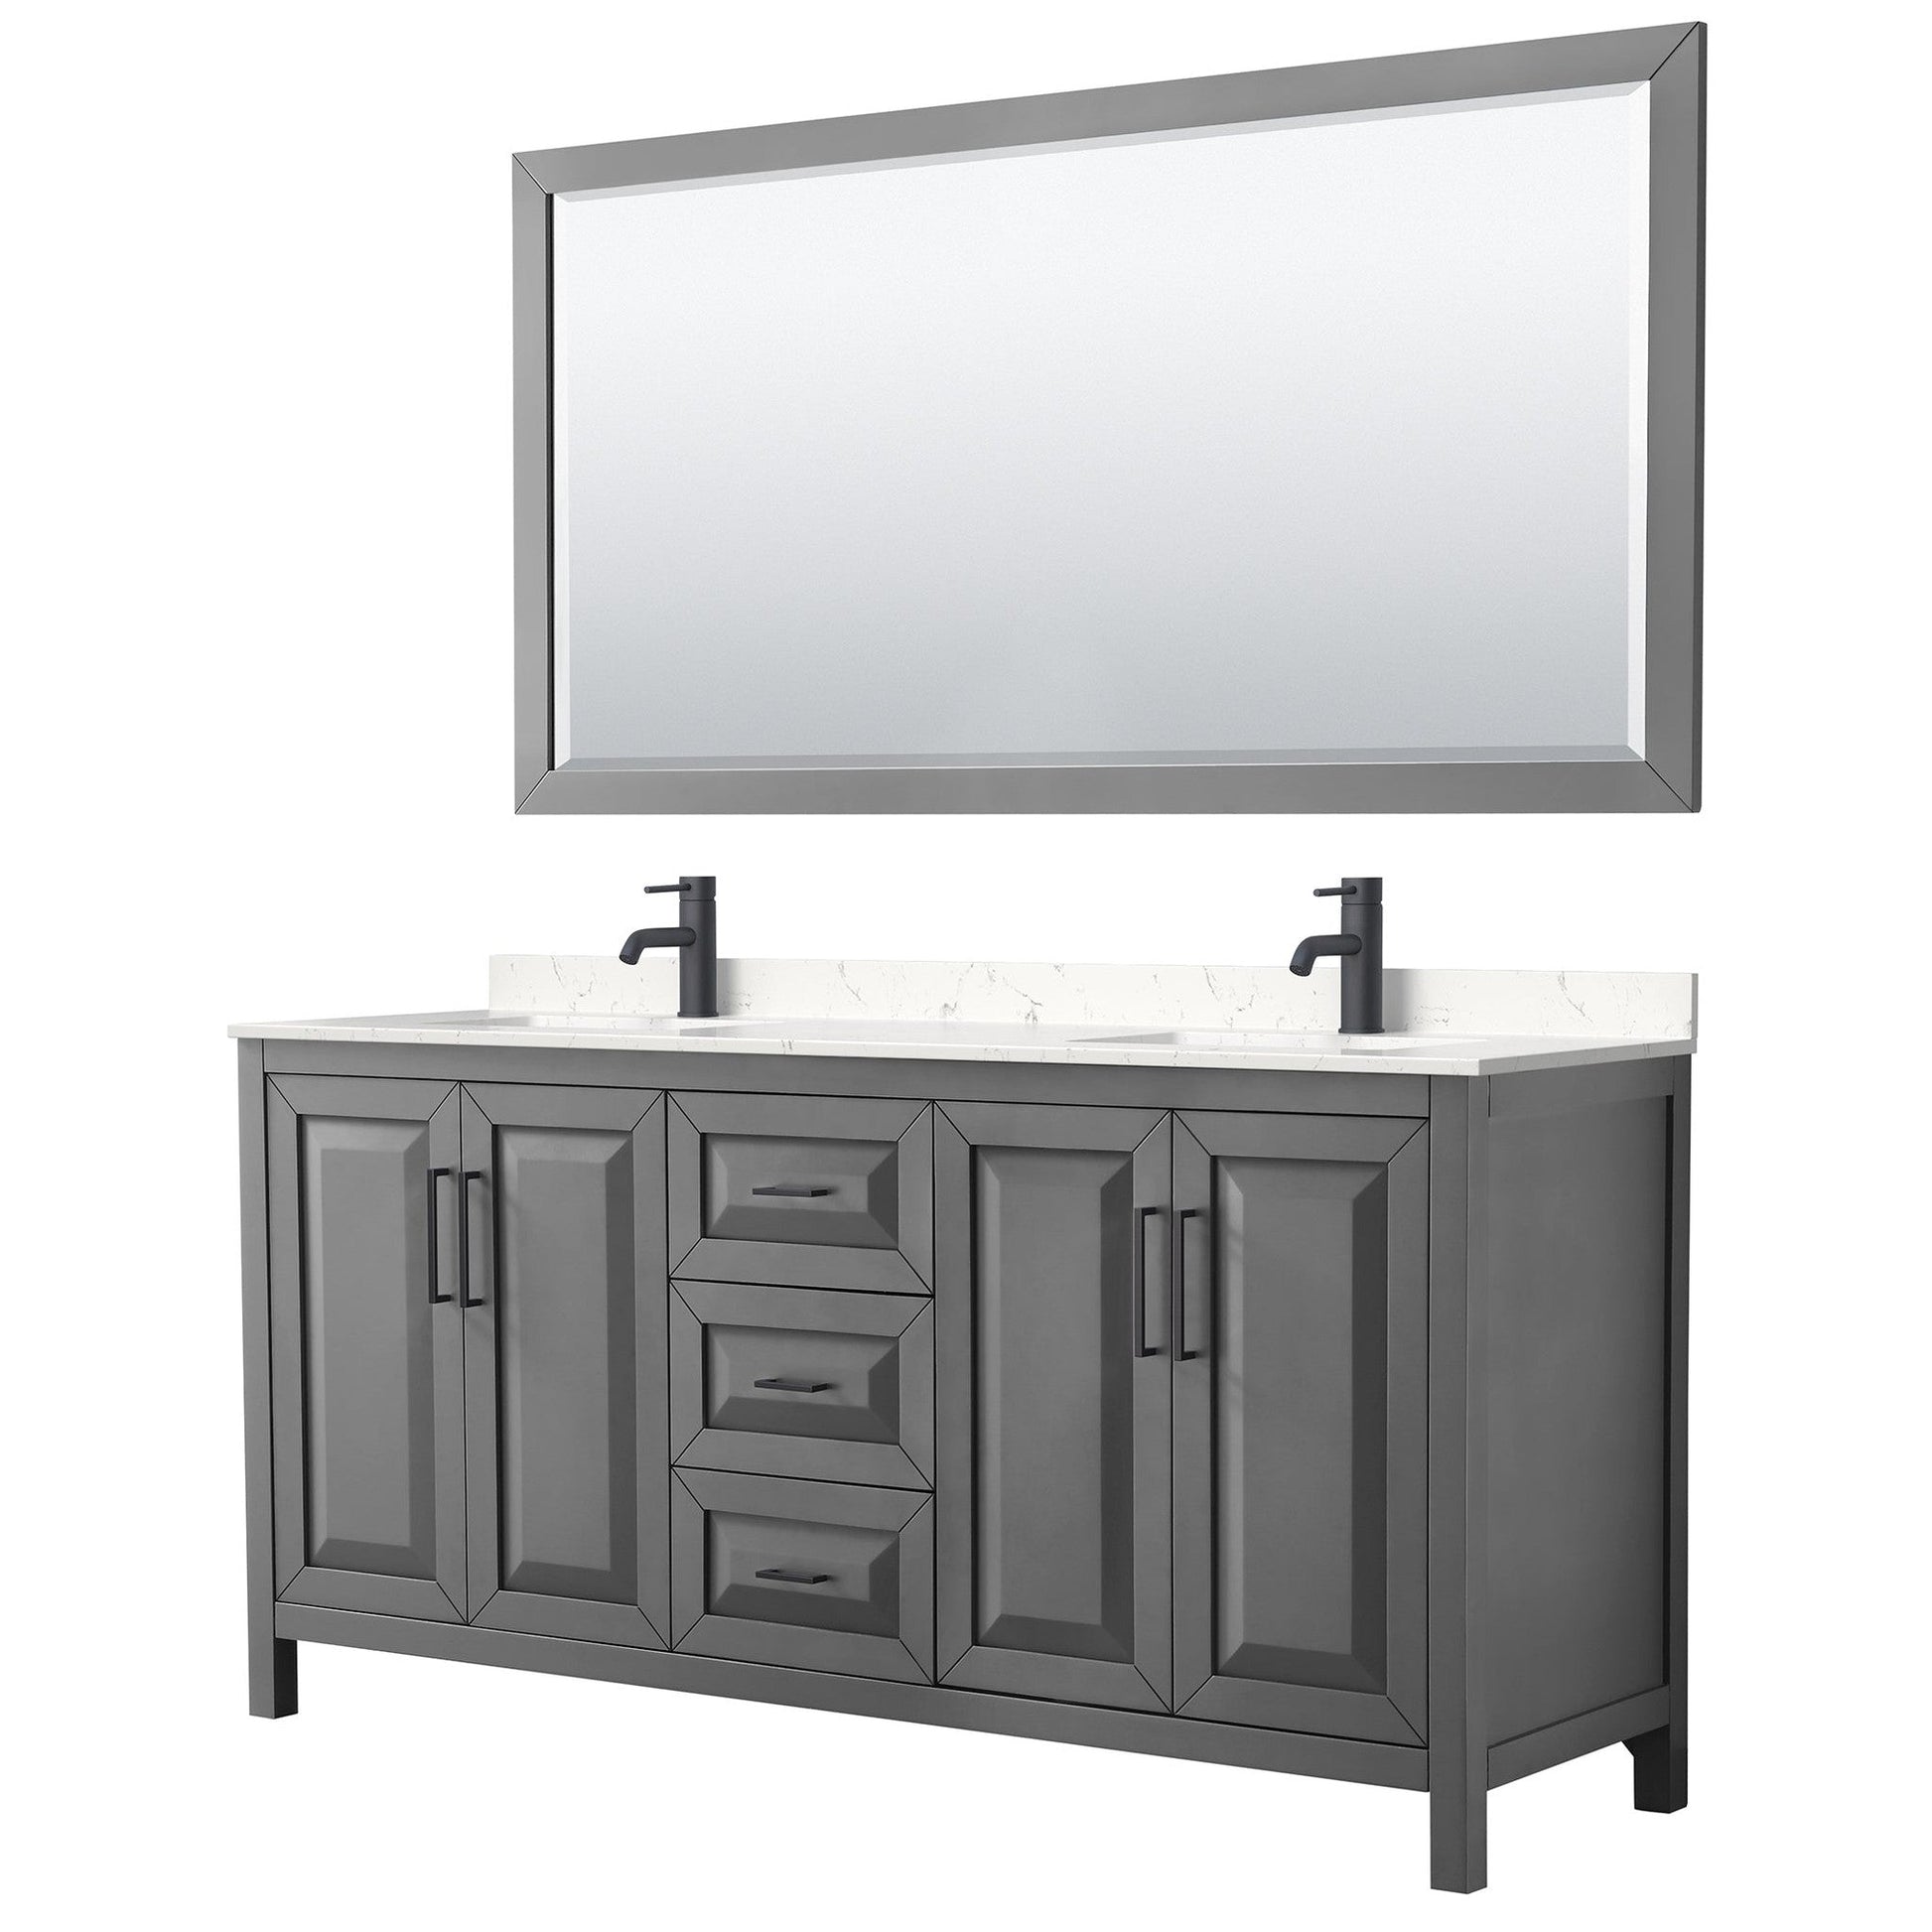 Daria 72" Double Bathroom Vanity in Dark Gray, Carrara Cultured Marble Countertop, Undermount Square Sinks, Matte Black Trim, 70" Mirror